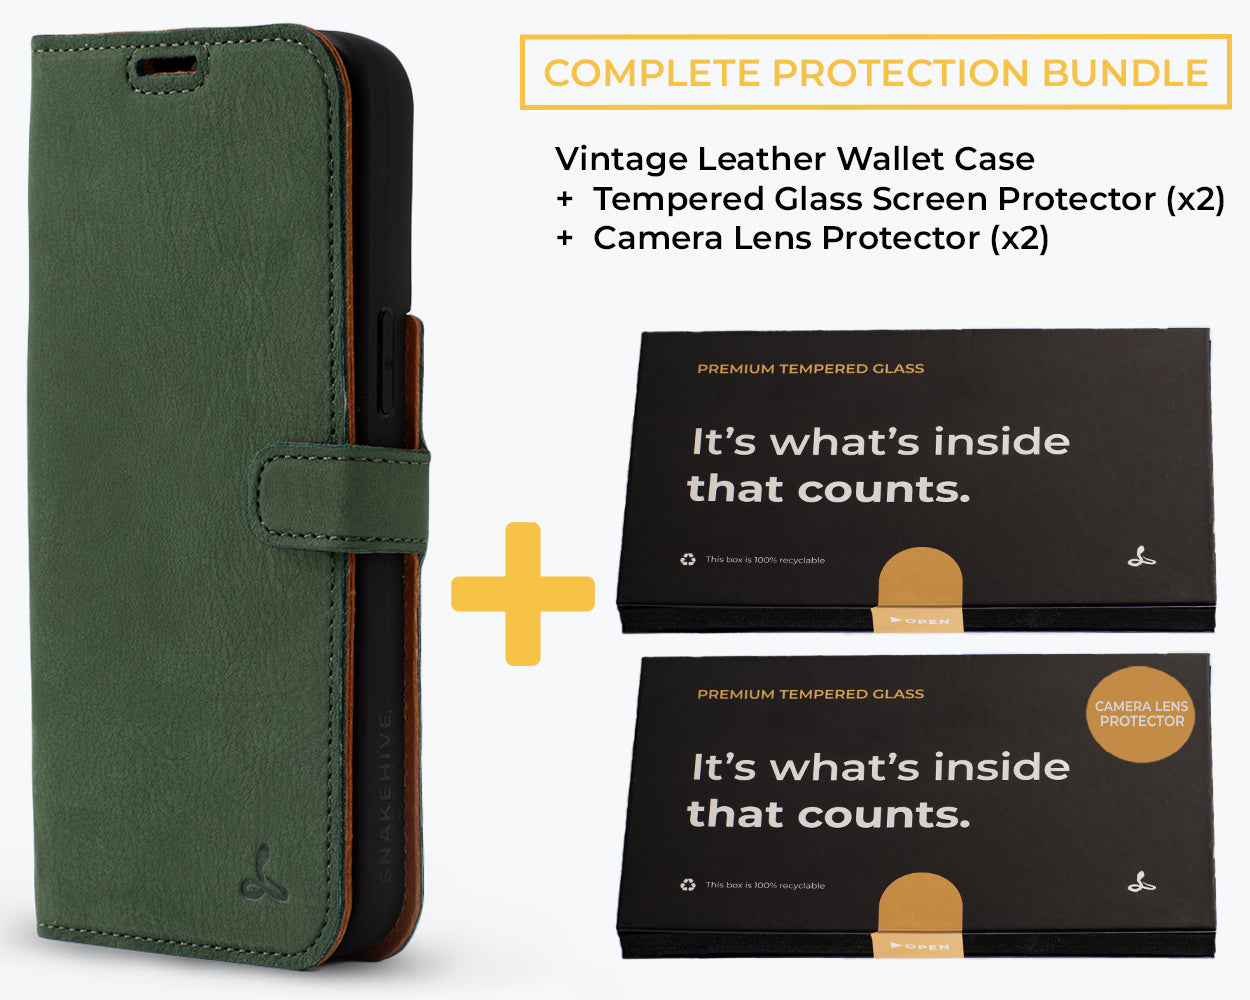 Complete Protection Bundle (Vintage Wallet) - Apple iPhone 12